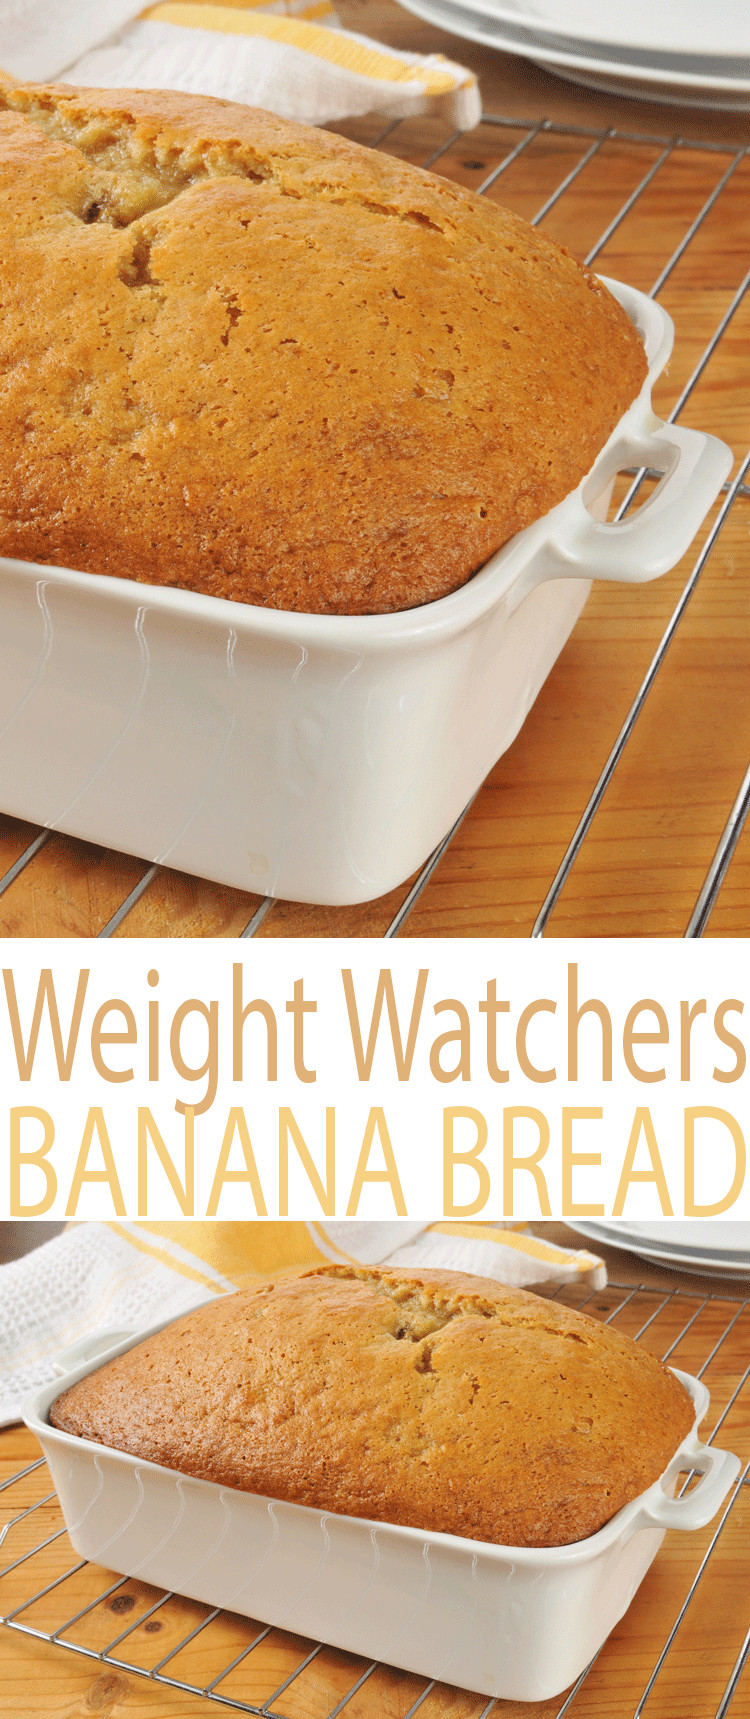 Weight Watcher Banana Bread Recipes
 Weight Watchers Banana Bread Recipe